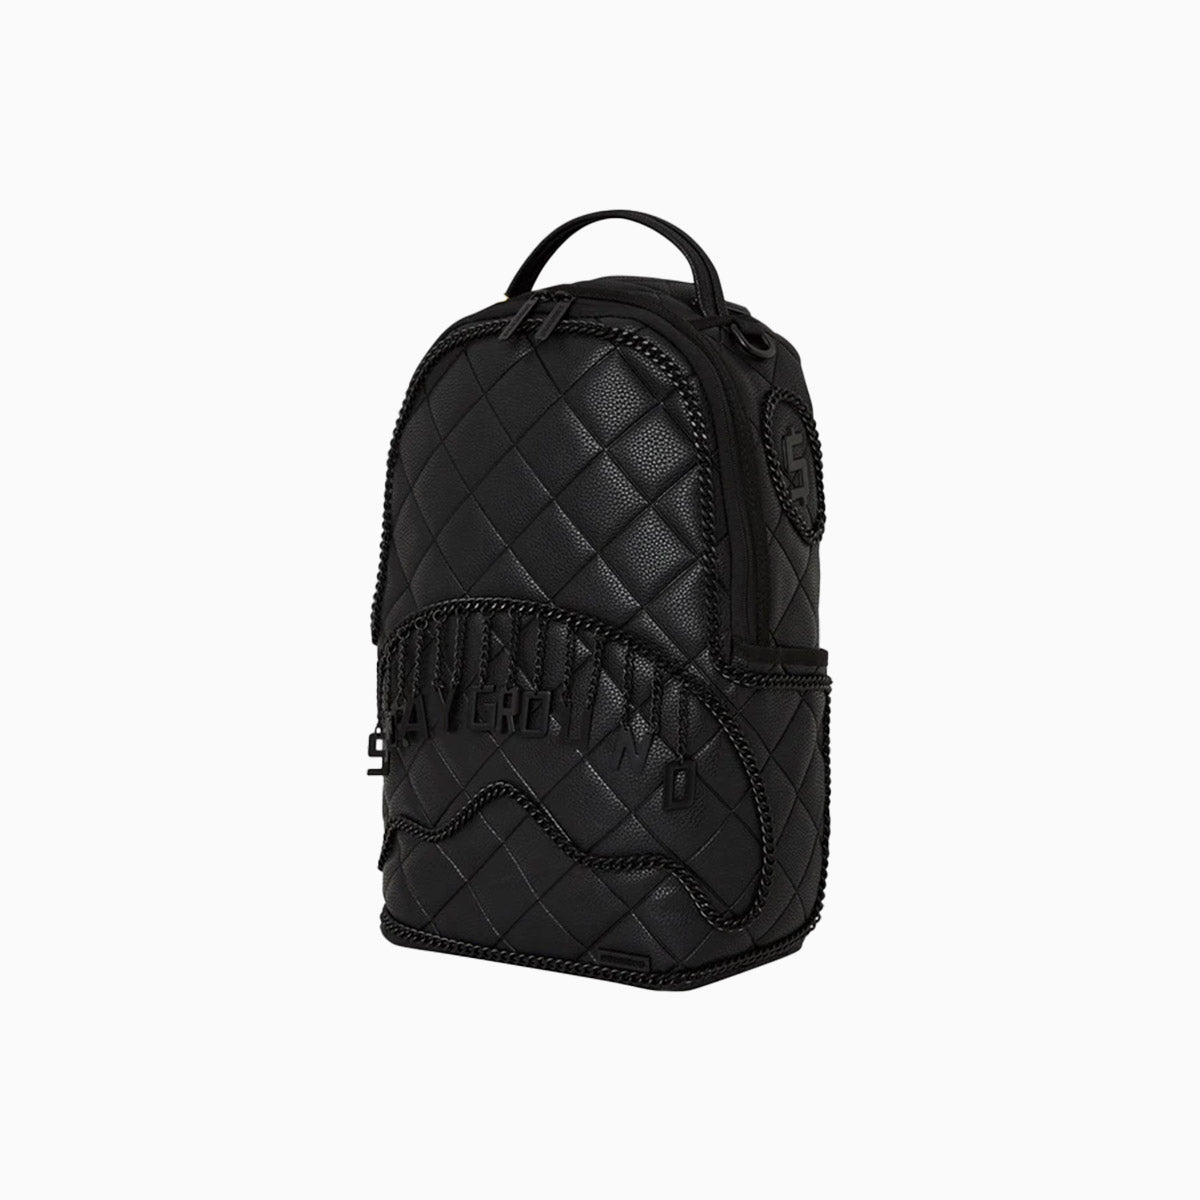 sprayground-quilted-logo-backpack-b5868-blk